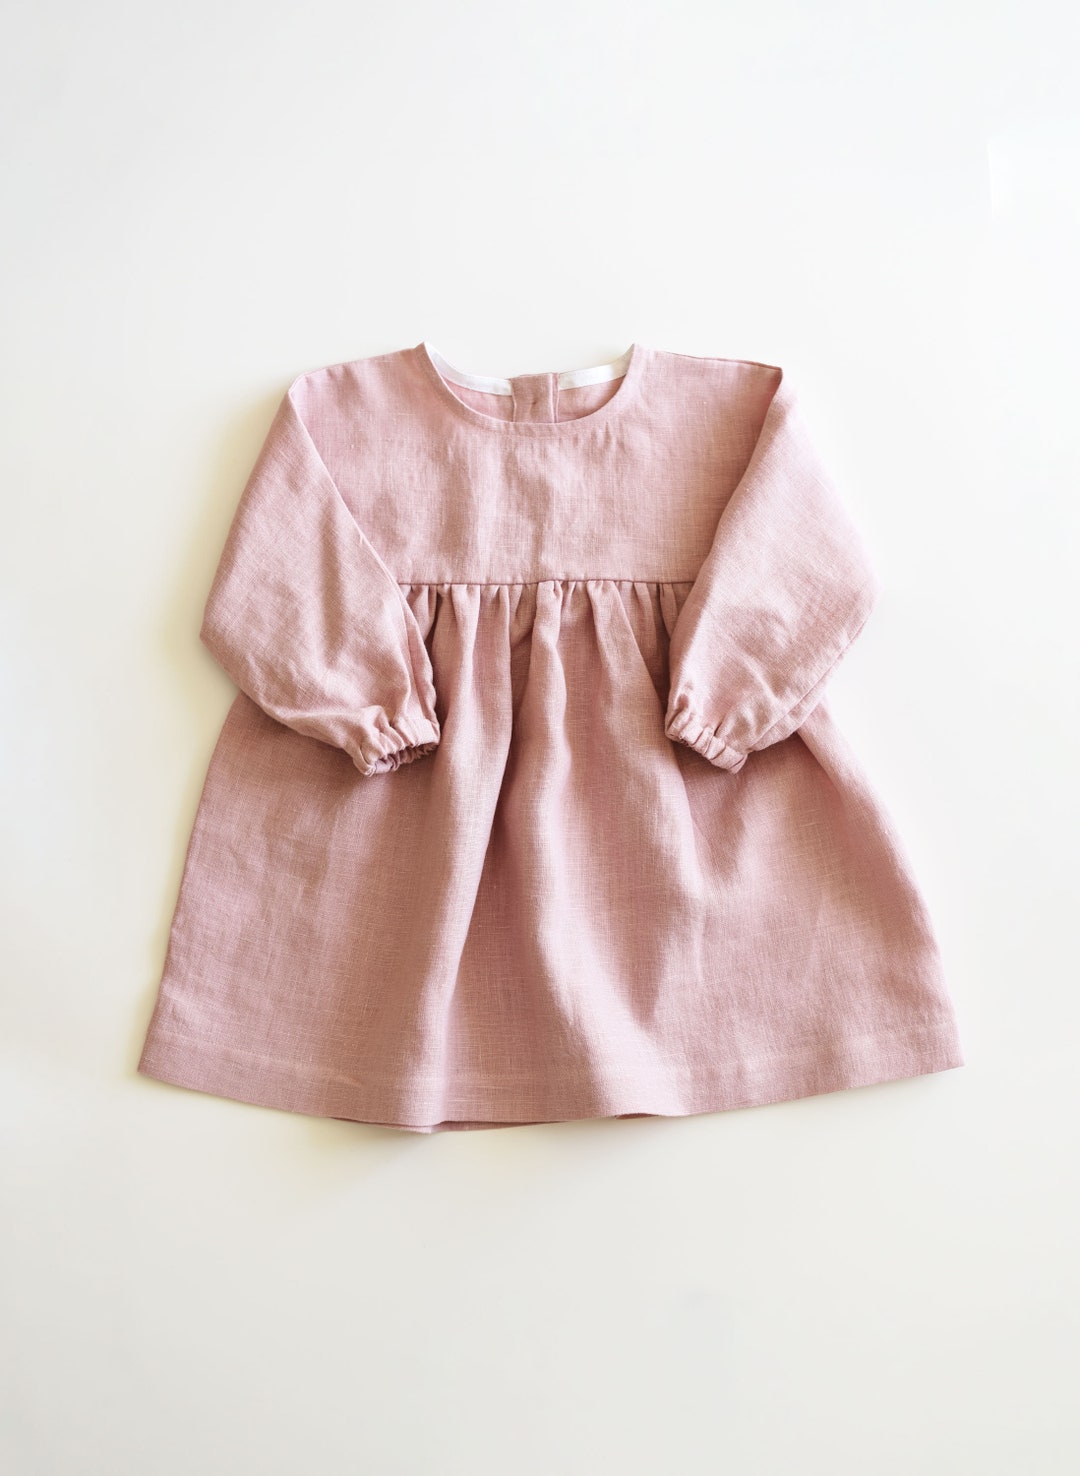 Linen Baby Dress Pink Baby Girl Dress Baby Easter Dress - Etsy